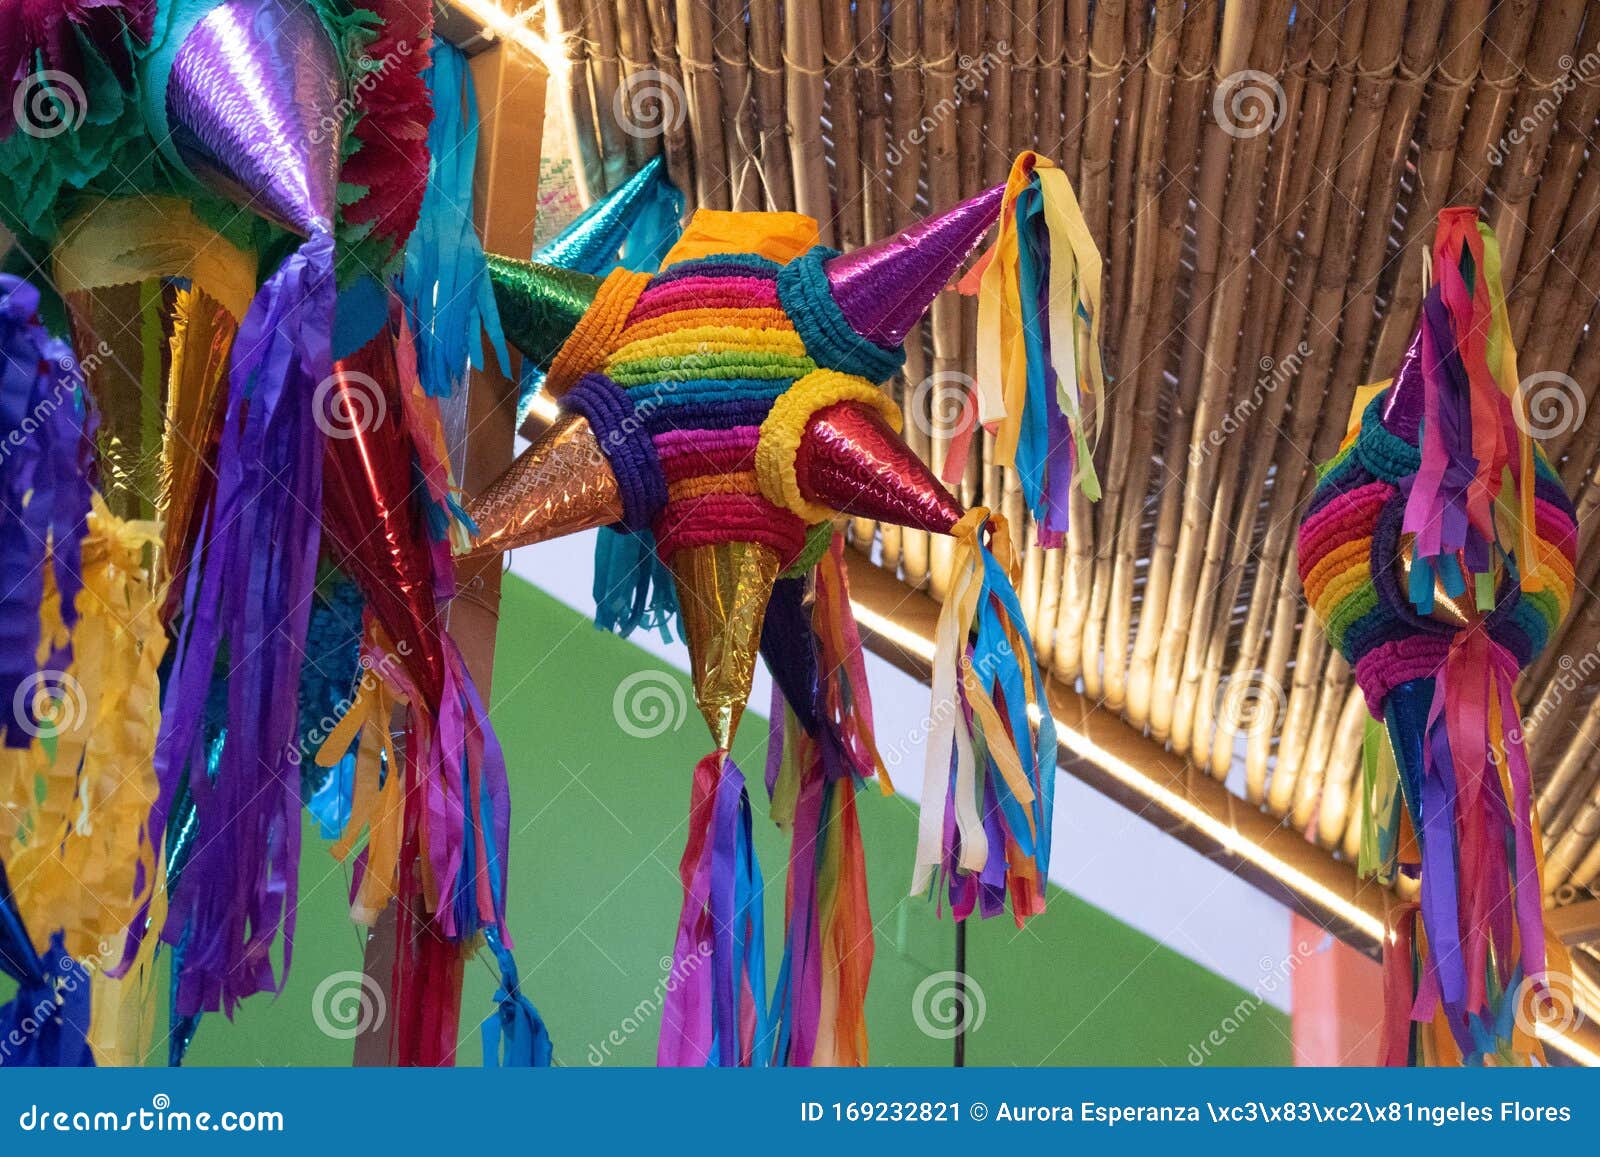 https://thumbs.dreamstime.com/z/traditional-colorful-mexican-pinatas-decoration-market-oaxaca-de-juarez-mexico-traditional-colorful-mexican-pinatas-169232821.jpg